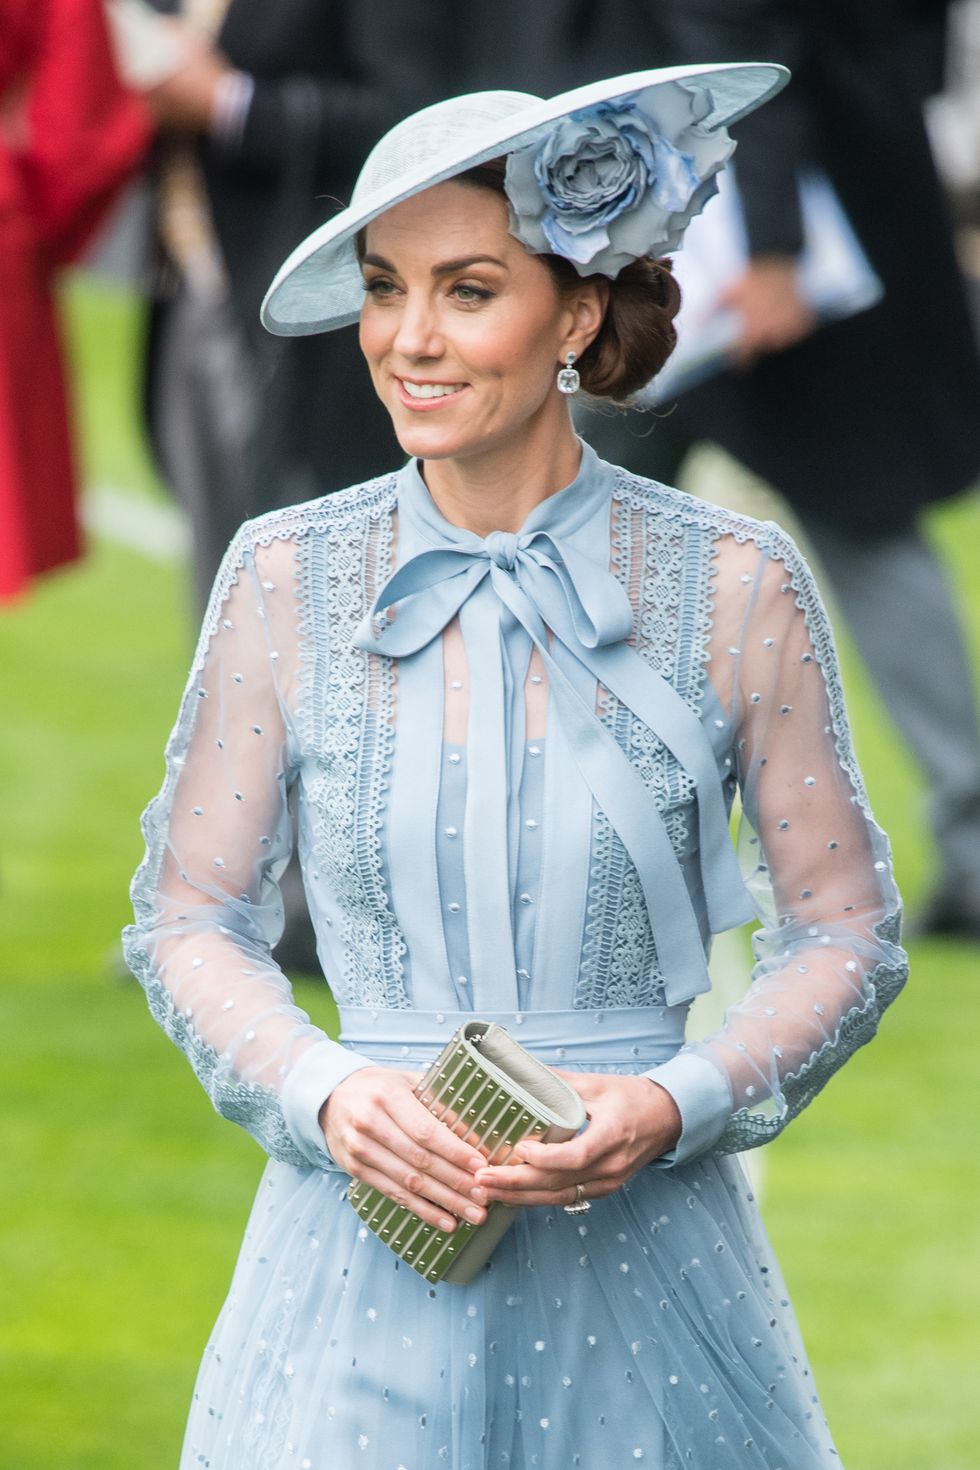 Kate Middleton Responds to Baby Botox Rumors